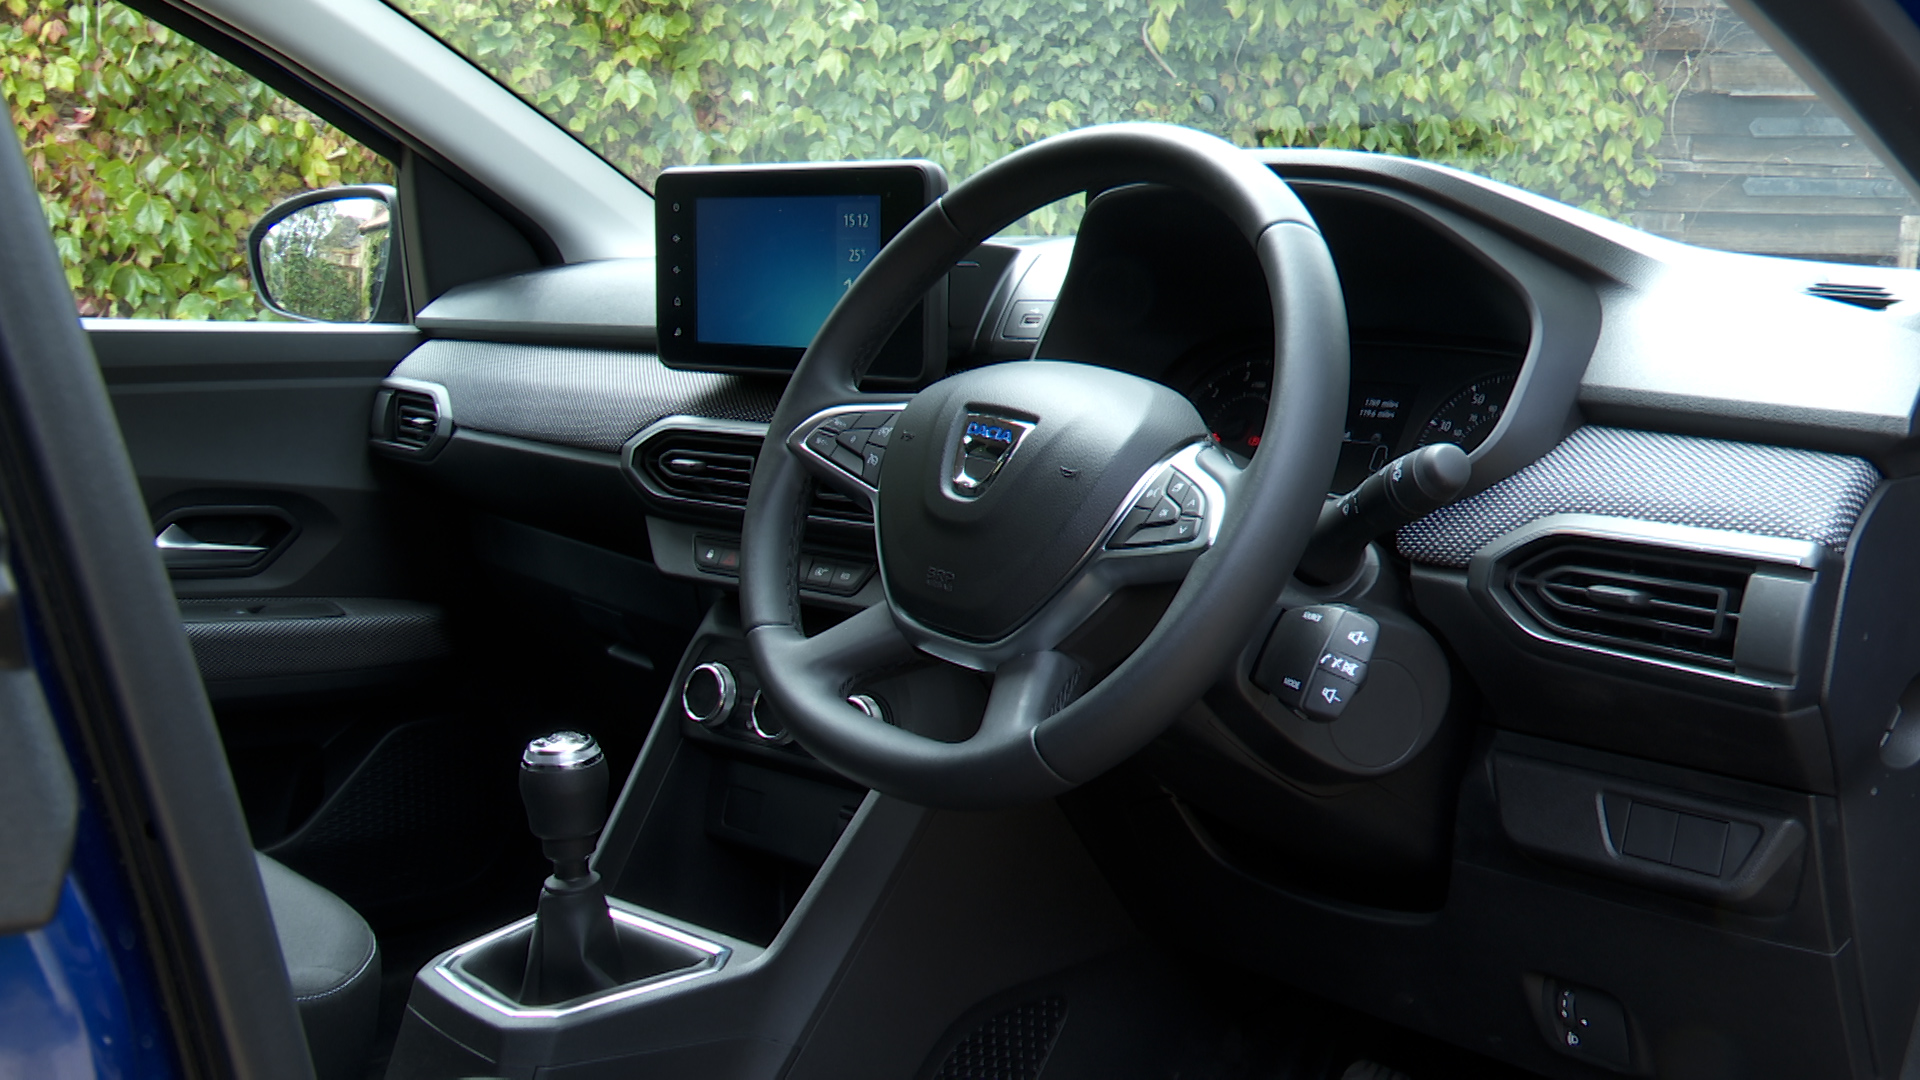 Brand New Dacia Jogger 1.6 HEV Extreme 5dr Auto